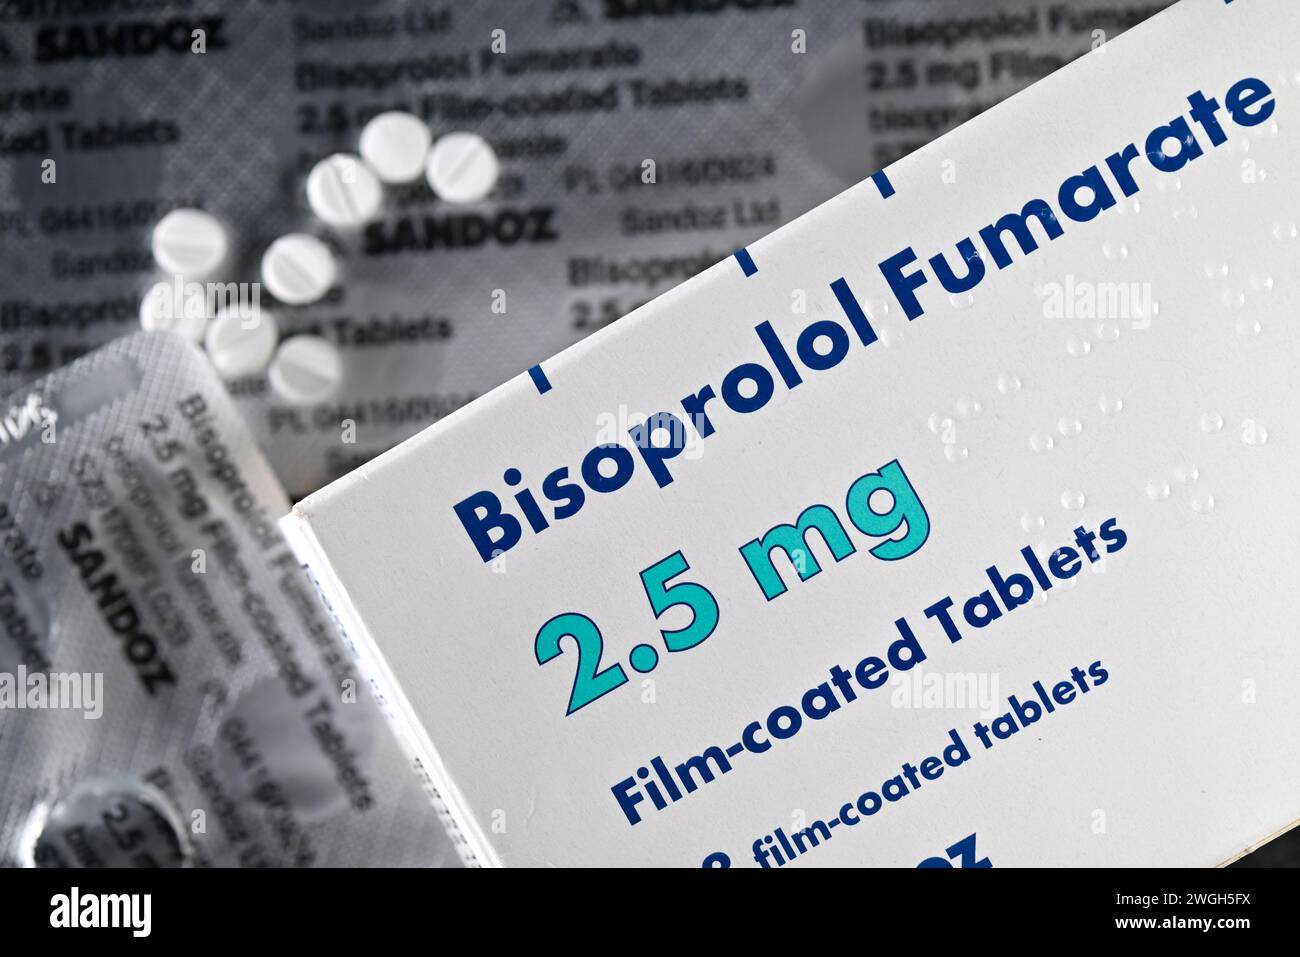 Fumarate de bisoprolol - médicament anti-hypertension - pilules de 2,5 mg Banque D'Images